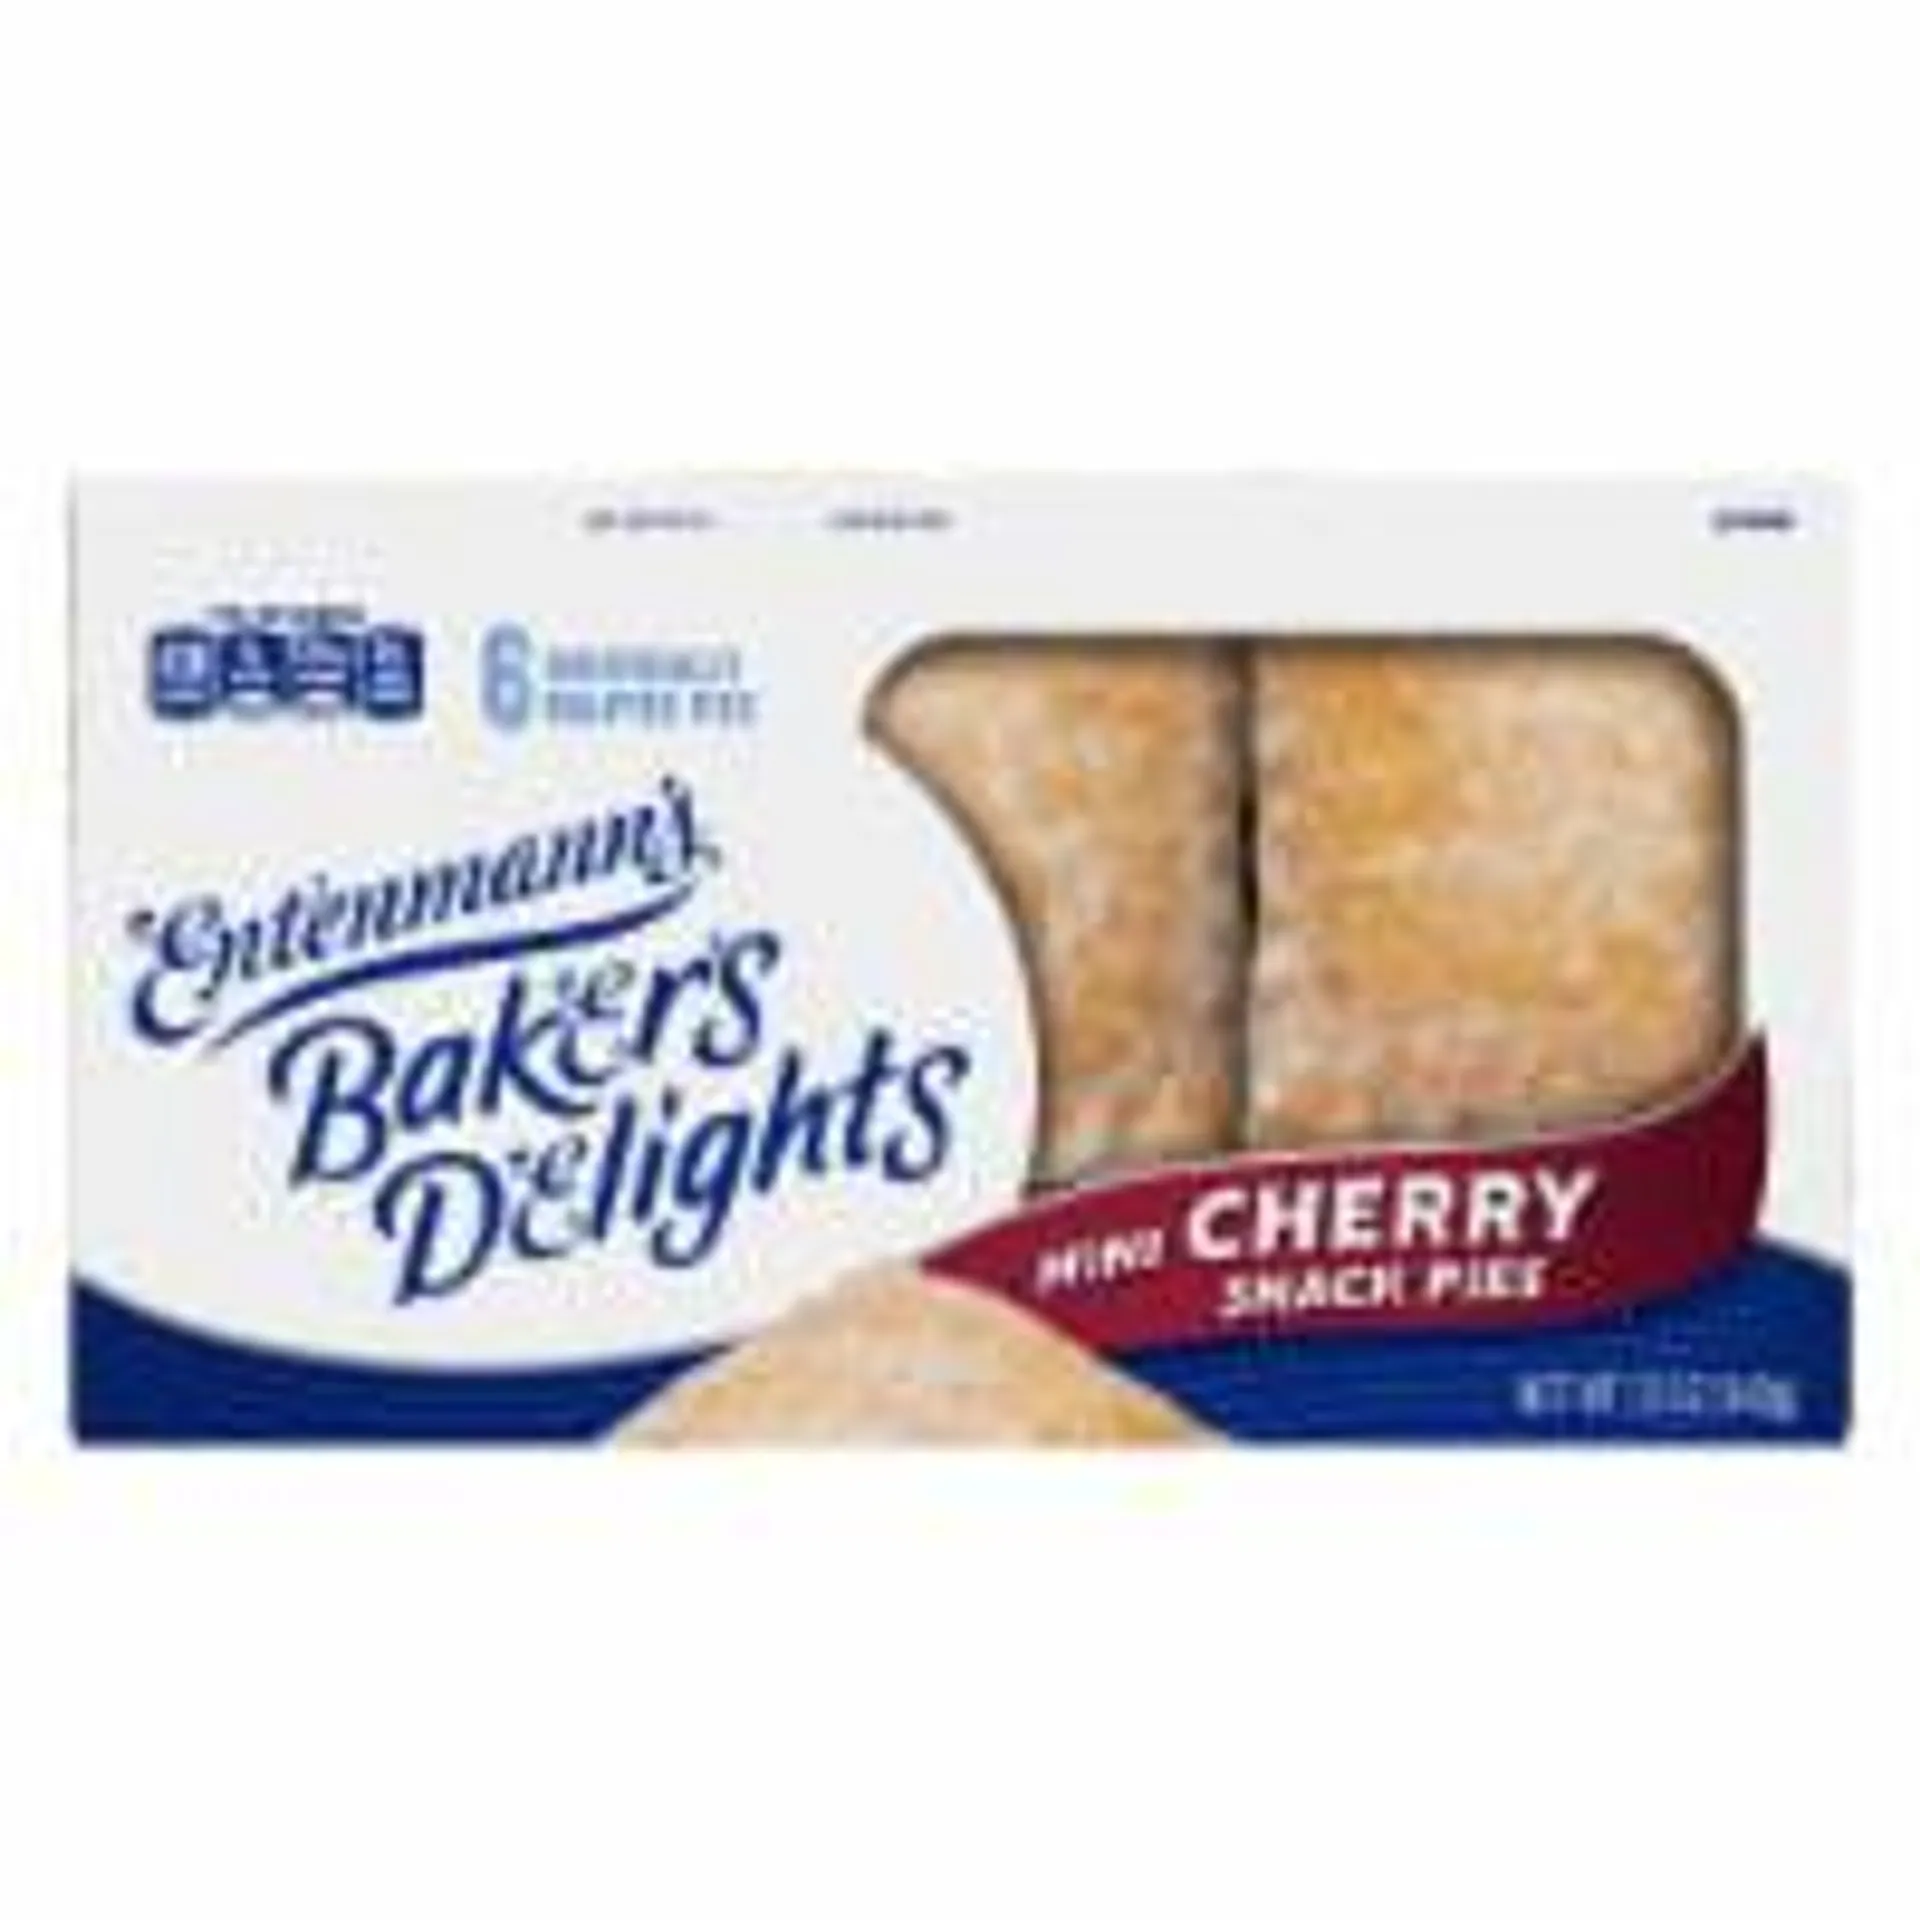 Entenmann's Baker's Delights Mini Cherry Snack Pies